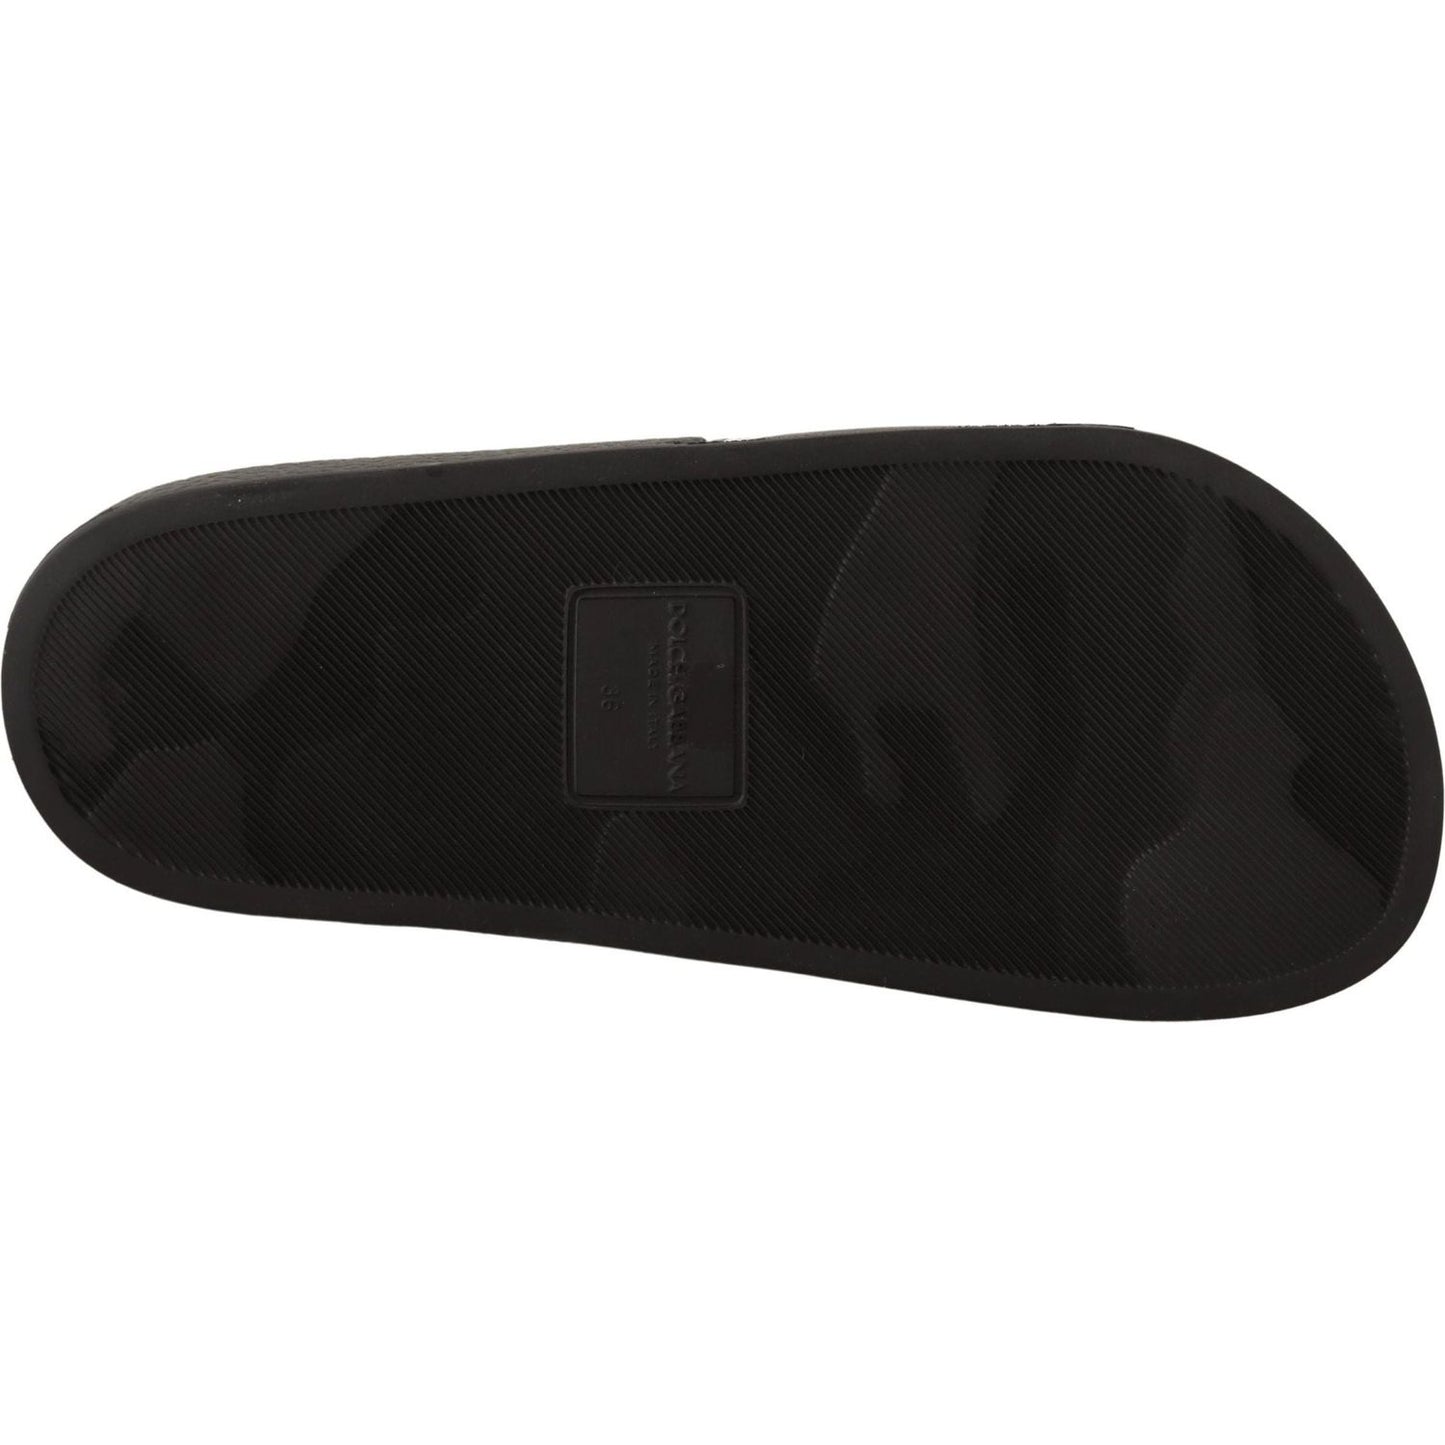 Dolce & Gabbana Elegant Black Leather Slide Sandals for Her black-leather-i-love-d-g-slides-sandals